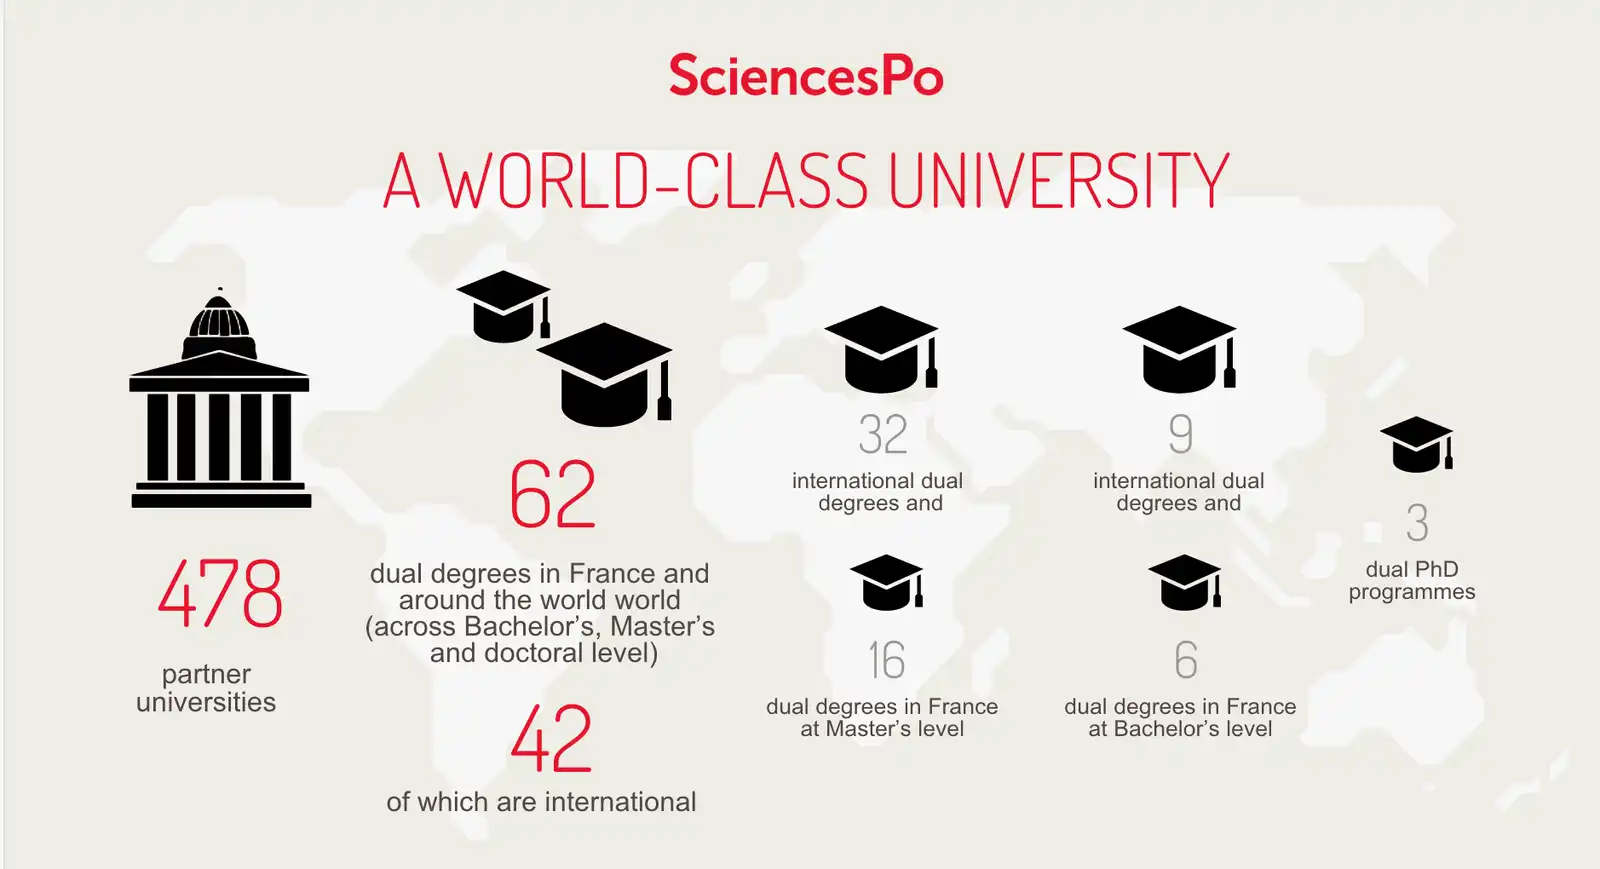 Sciences Po, a world-class university